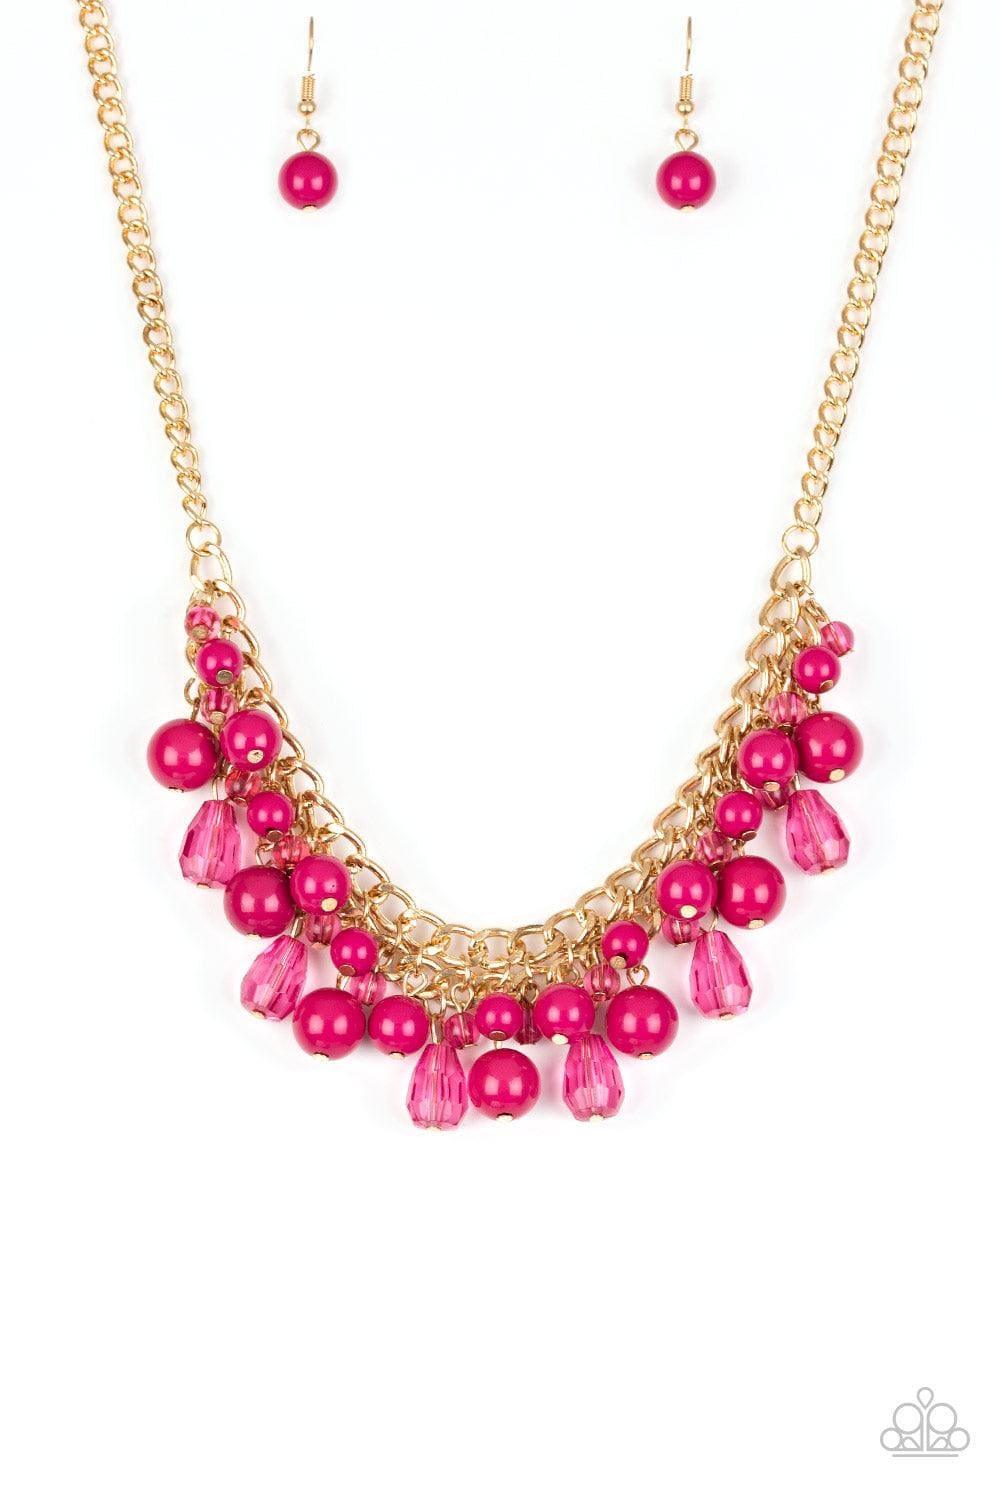 Paparazzi Accessories - Tour De Trendsetter - Pink Necklace - Bling by JessieK